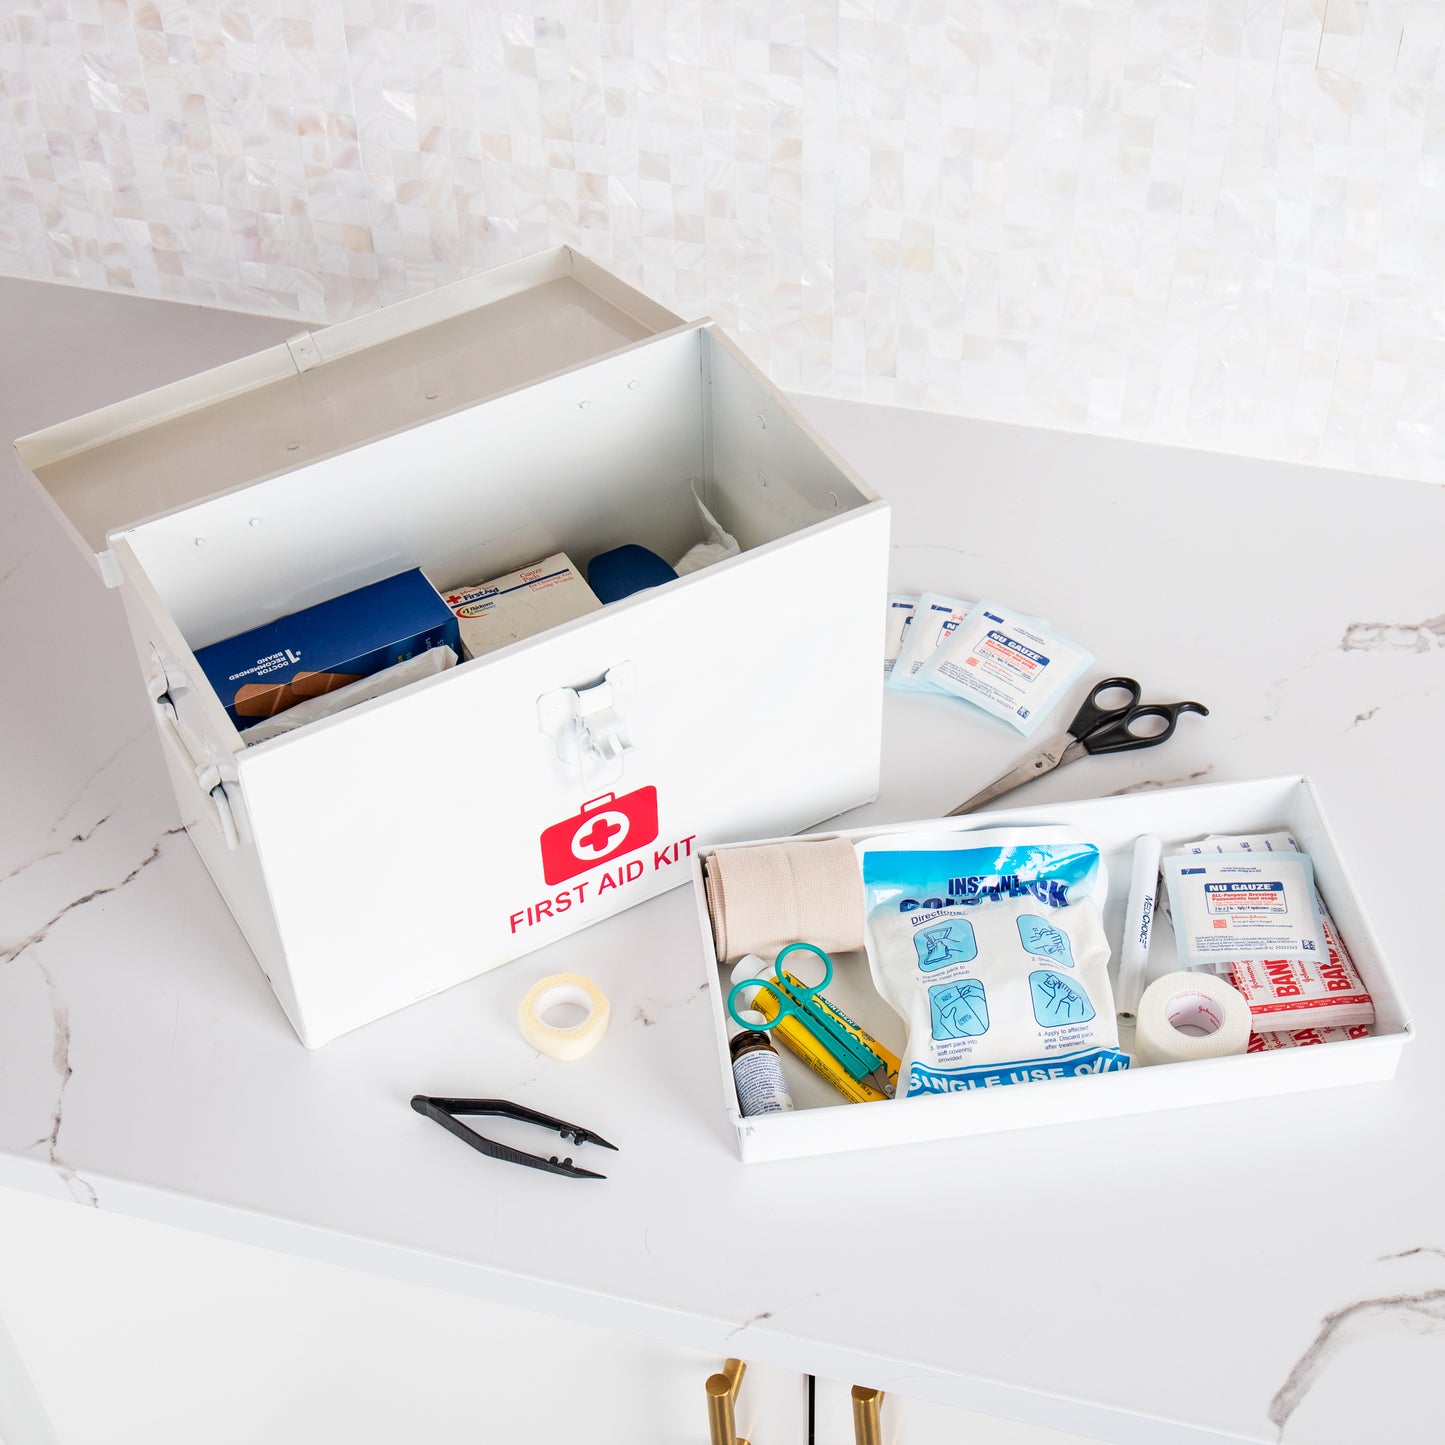 Mind Reader First Aid Box, Emergency Kit, Medical Supply Organizer, Vintage, Buckle Lock, Metal, 13.25"L x 7"W x 8.25"H, Red